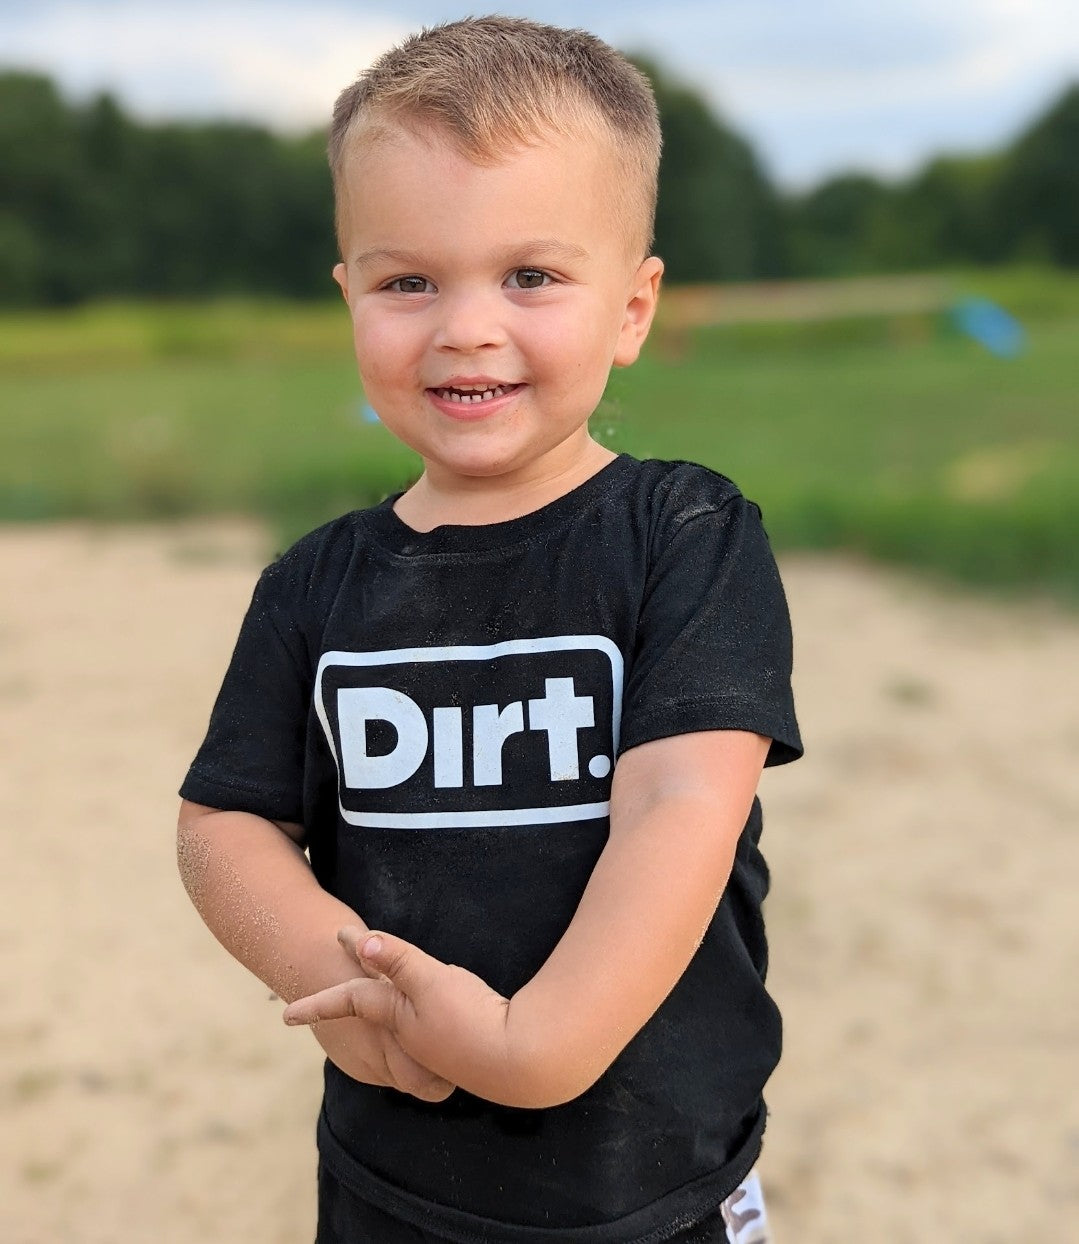 Dirt. Shirt - Youth